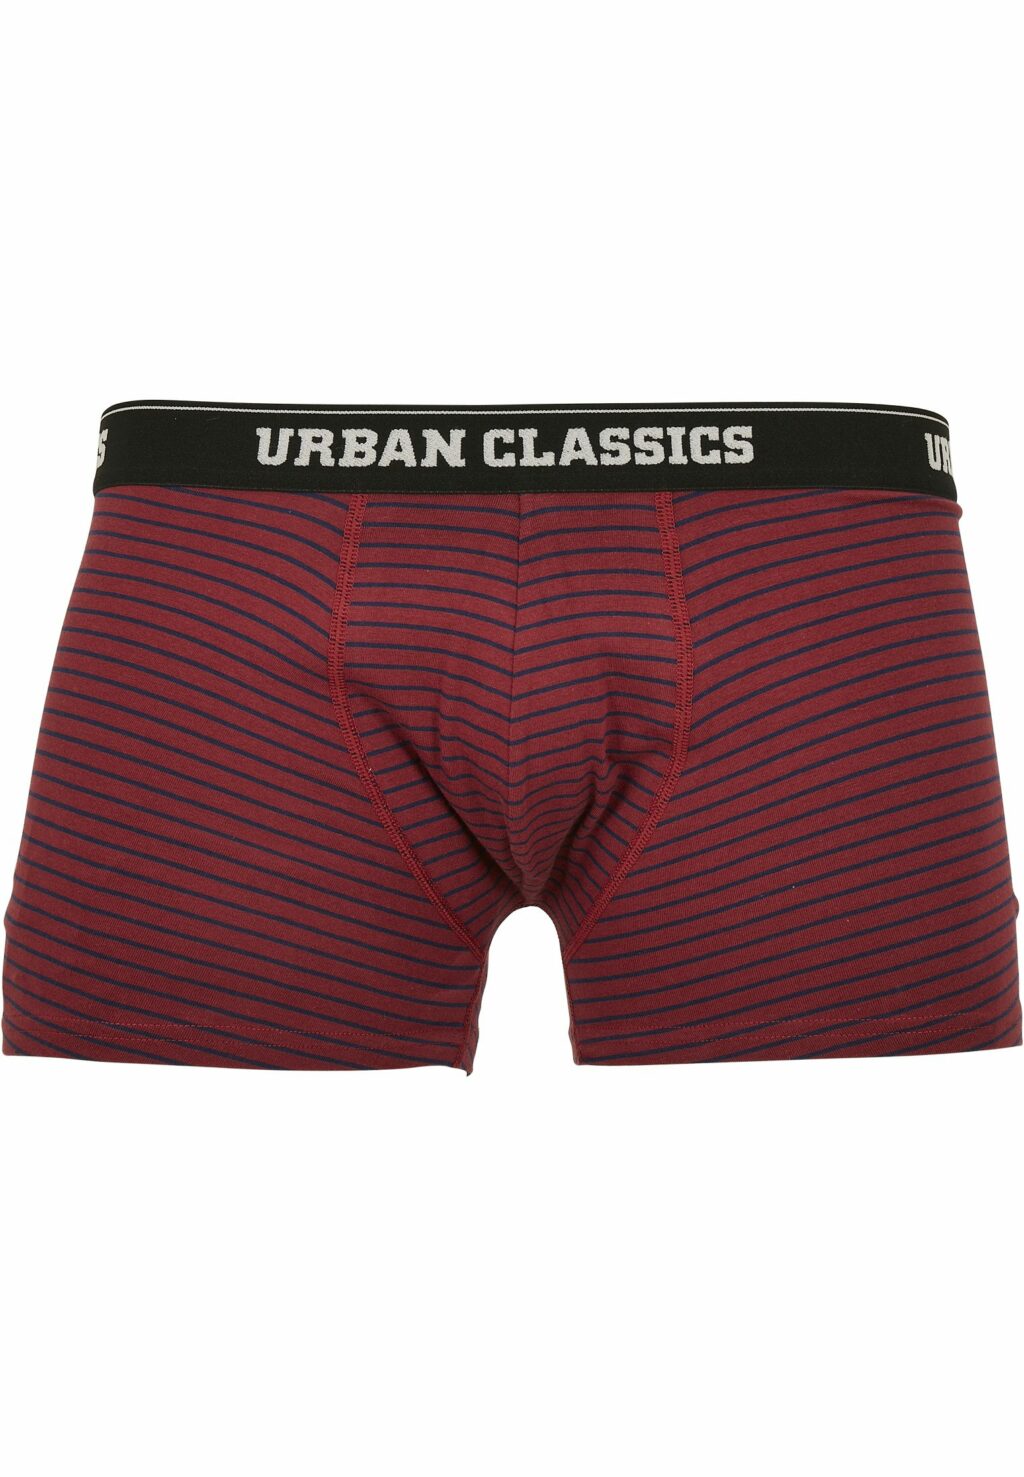 Urban Classics Boxer Shorts 3-Pack btlgrn/dkblu+bur/dkblu+wht/blk TB3844